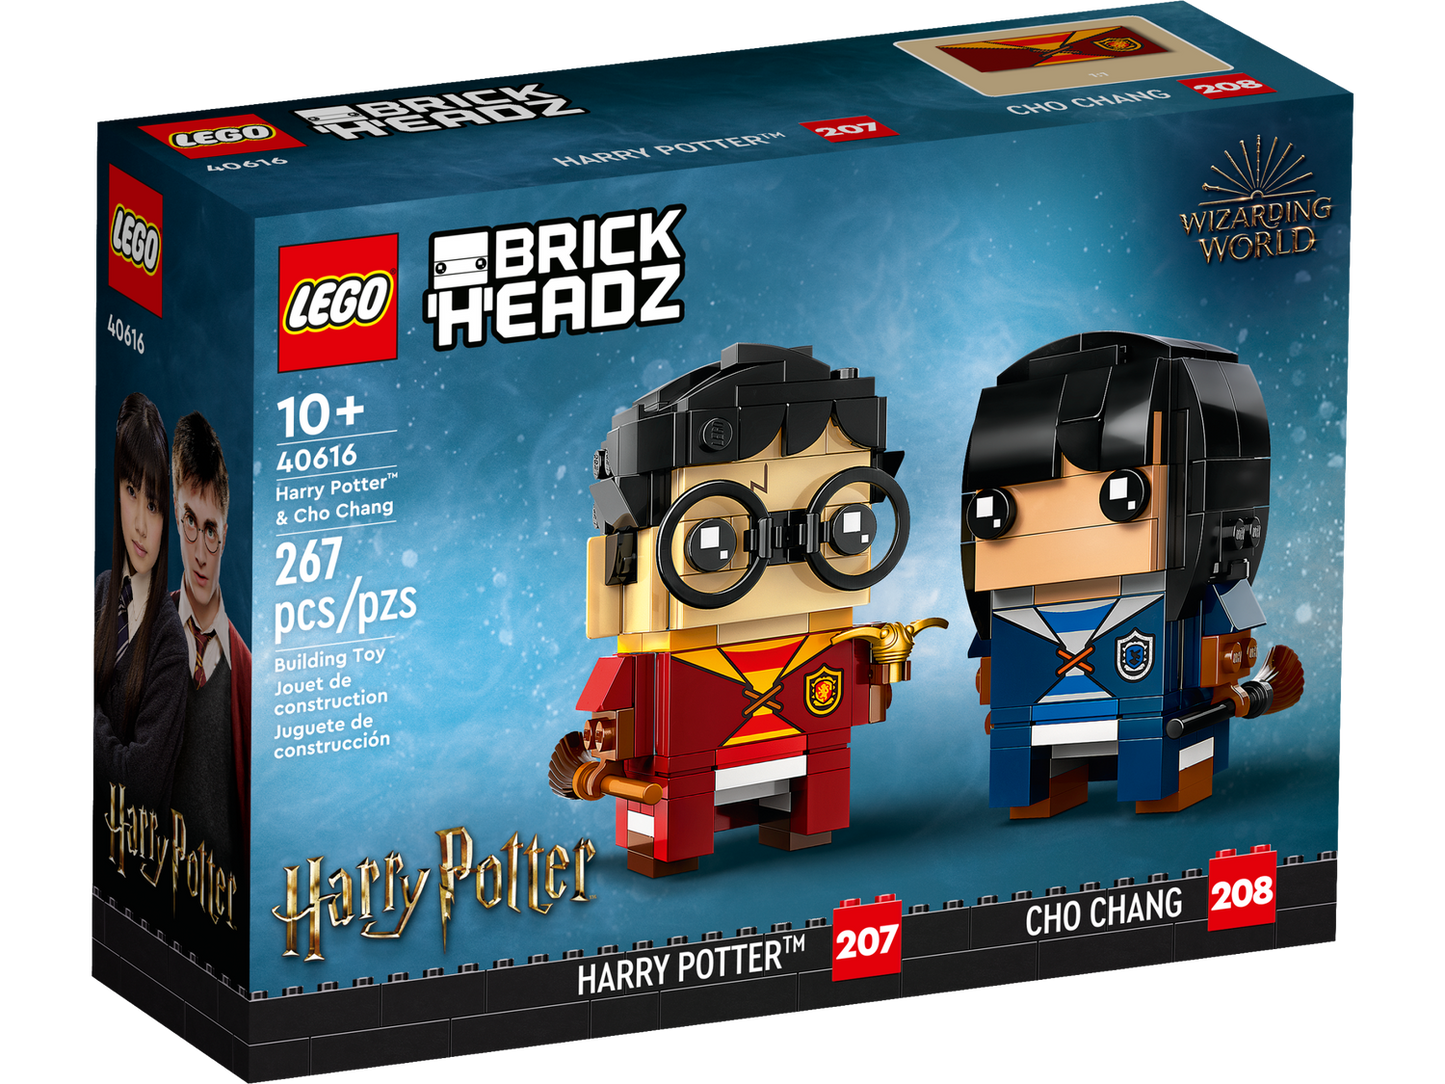 BrickHeadz 40616 Harry Potter & Cho Chang